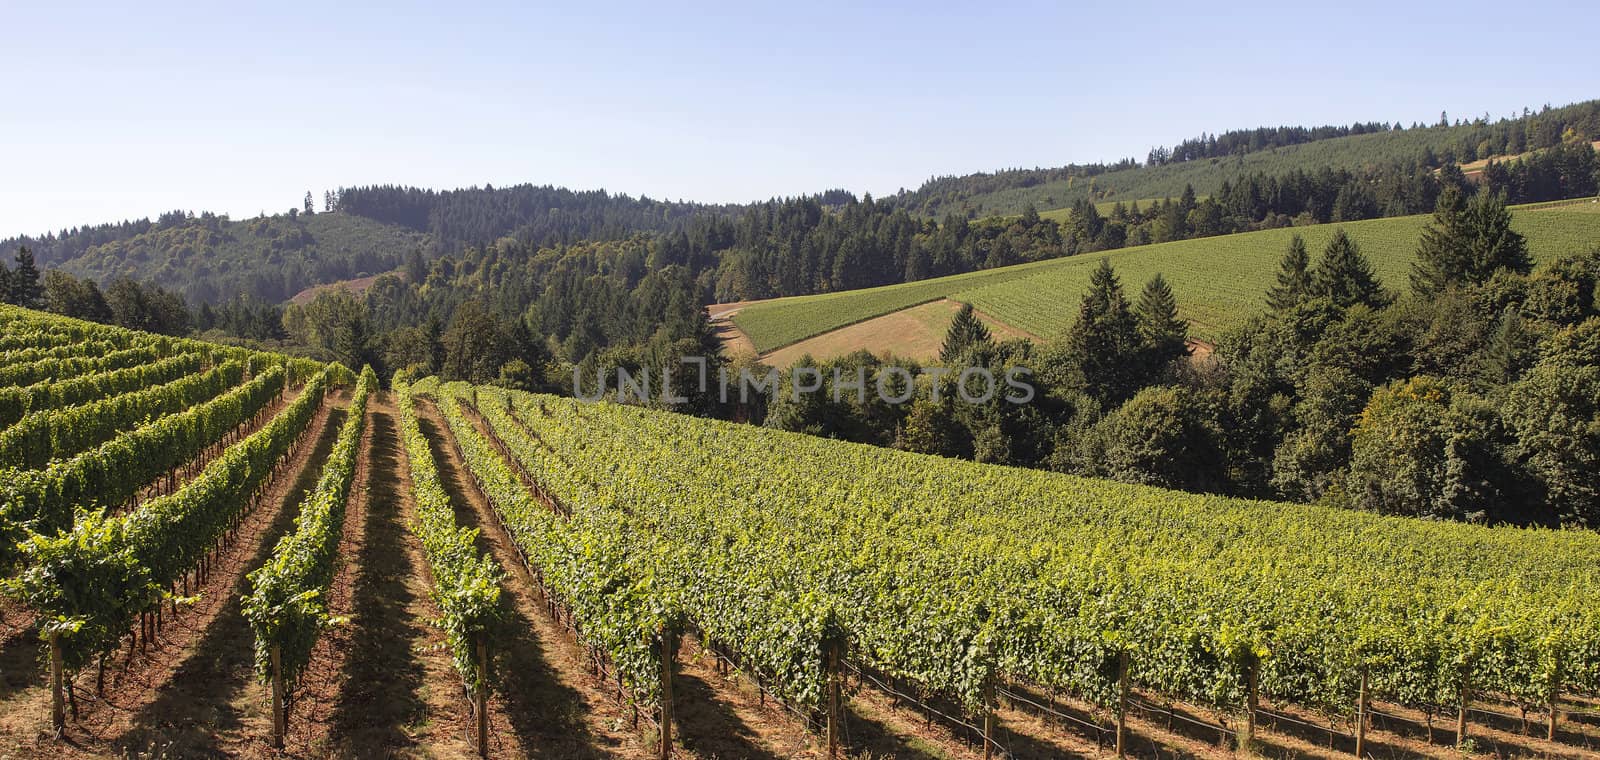 Winery Vineyard Landscape by jpldesigns